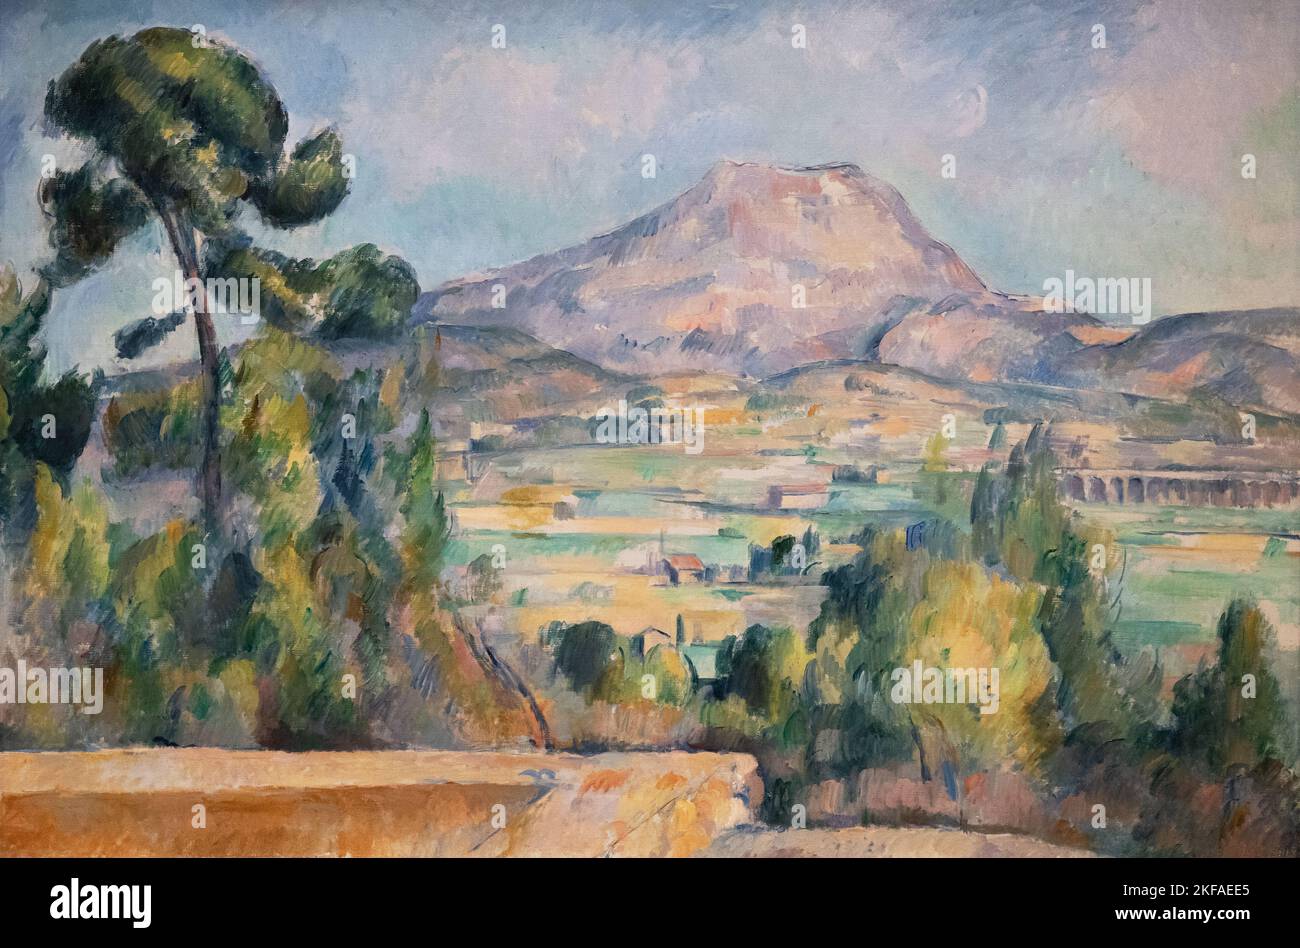 Paul Cezanne painting - Montagne Sainte Victoire c 1890 landscape oil painting, Southern France. Post Impressionism paintings, 19th century Stock Photo